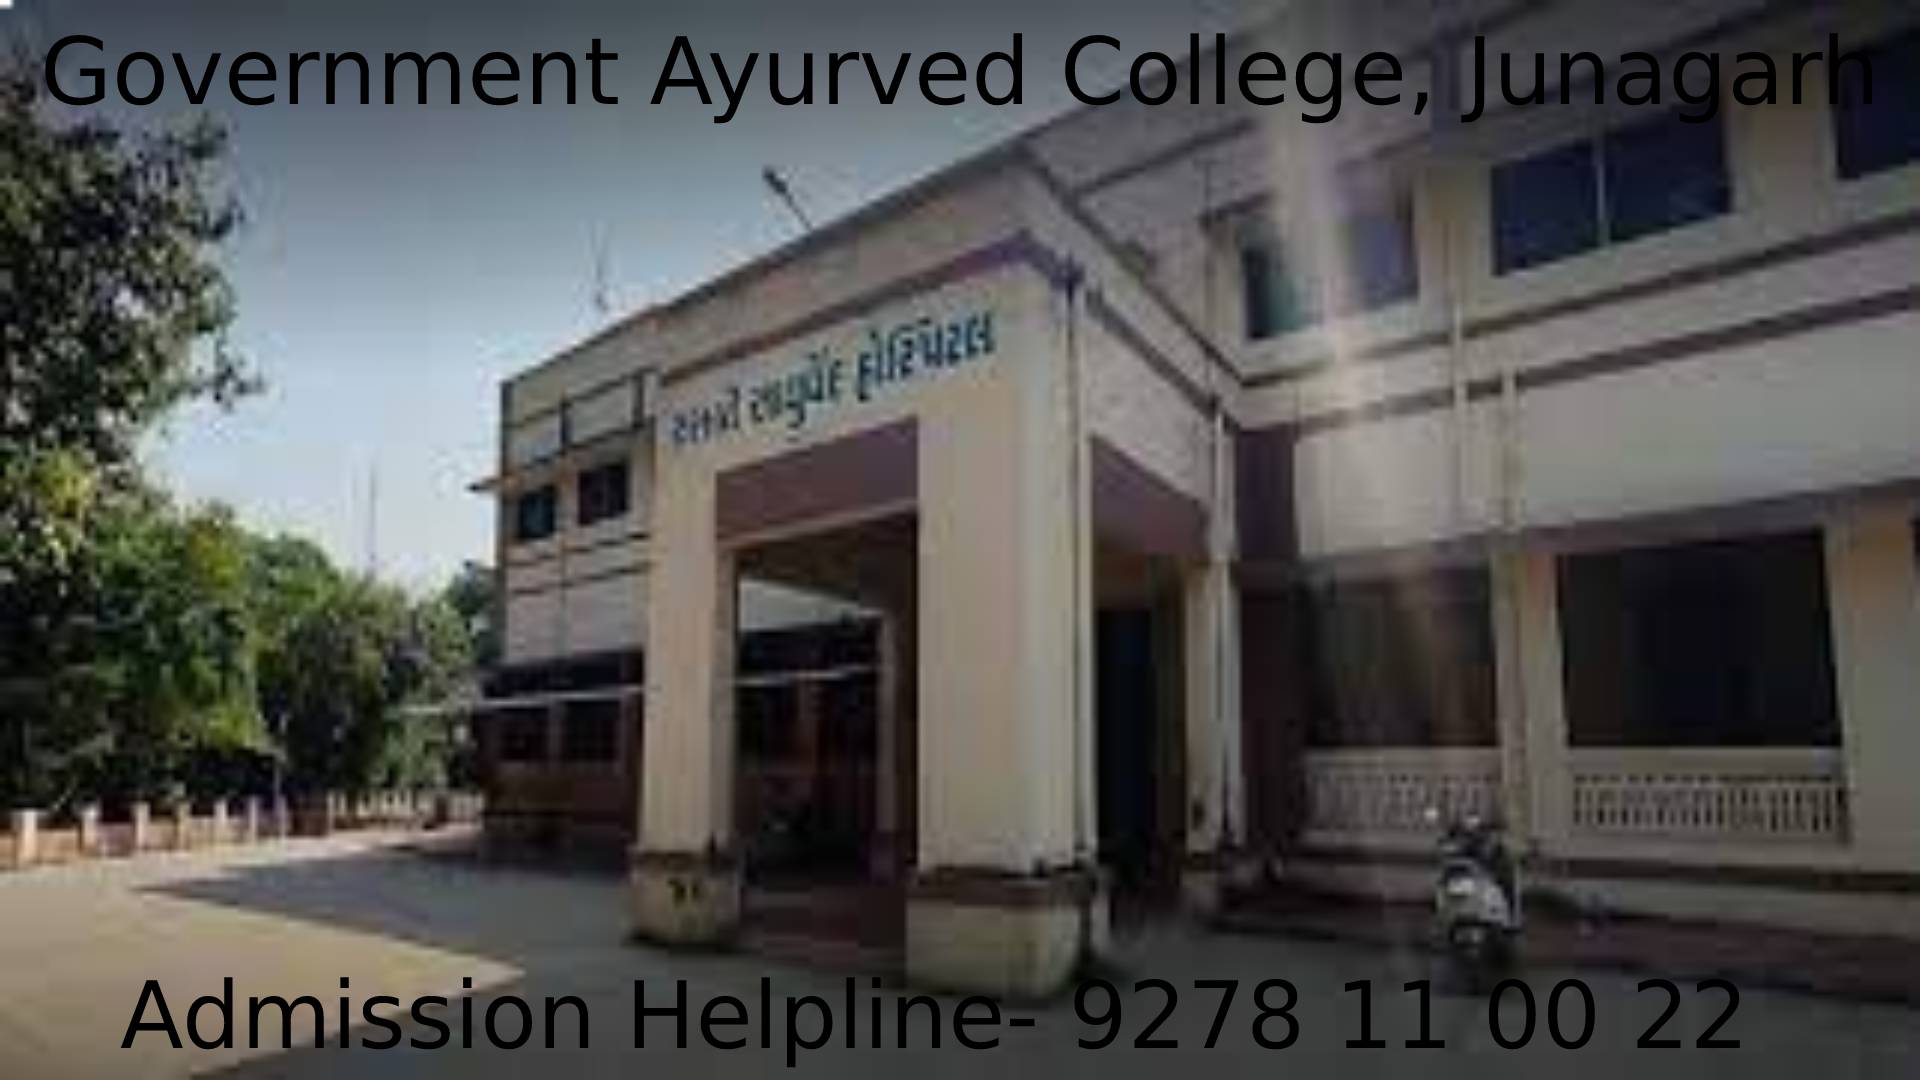 Government Ayurved College, Junagarh